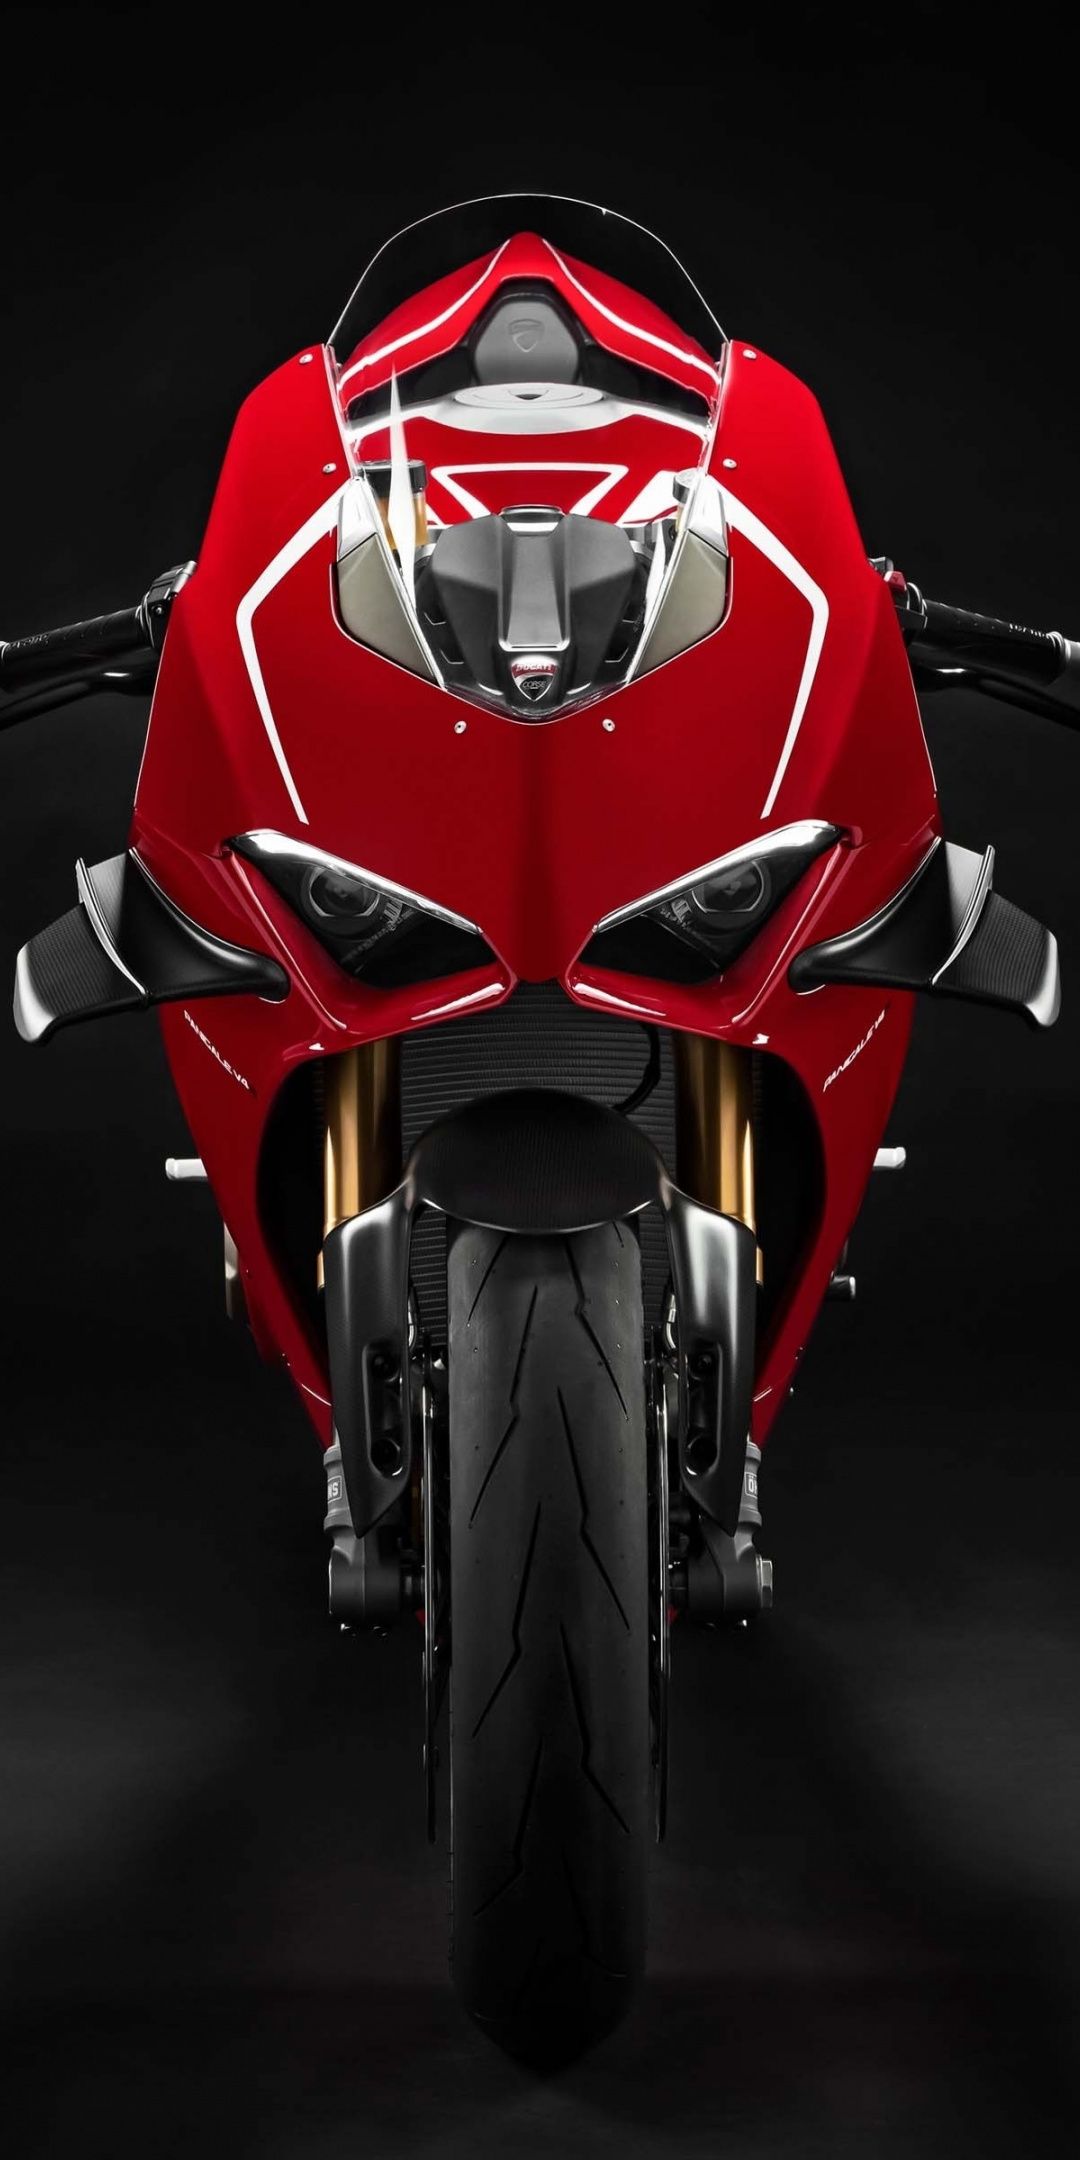 Ducati Panigale V4 R Pure Racing bike 2019 1080x2160 wallpaper